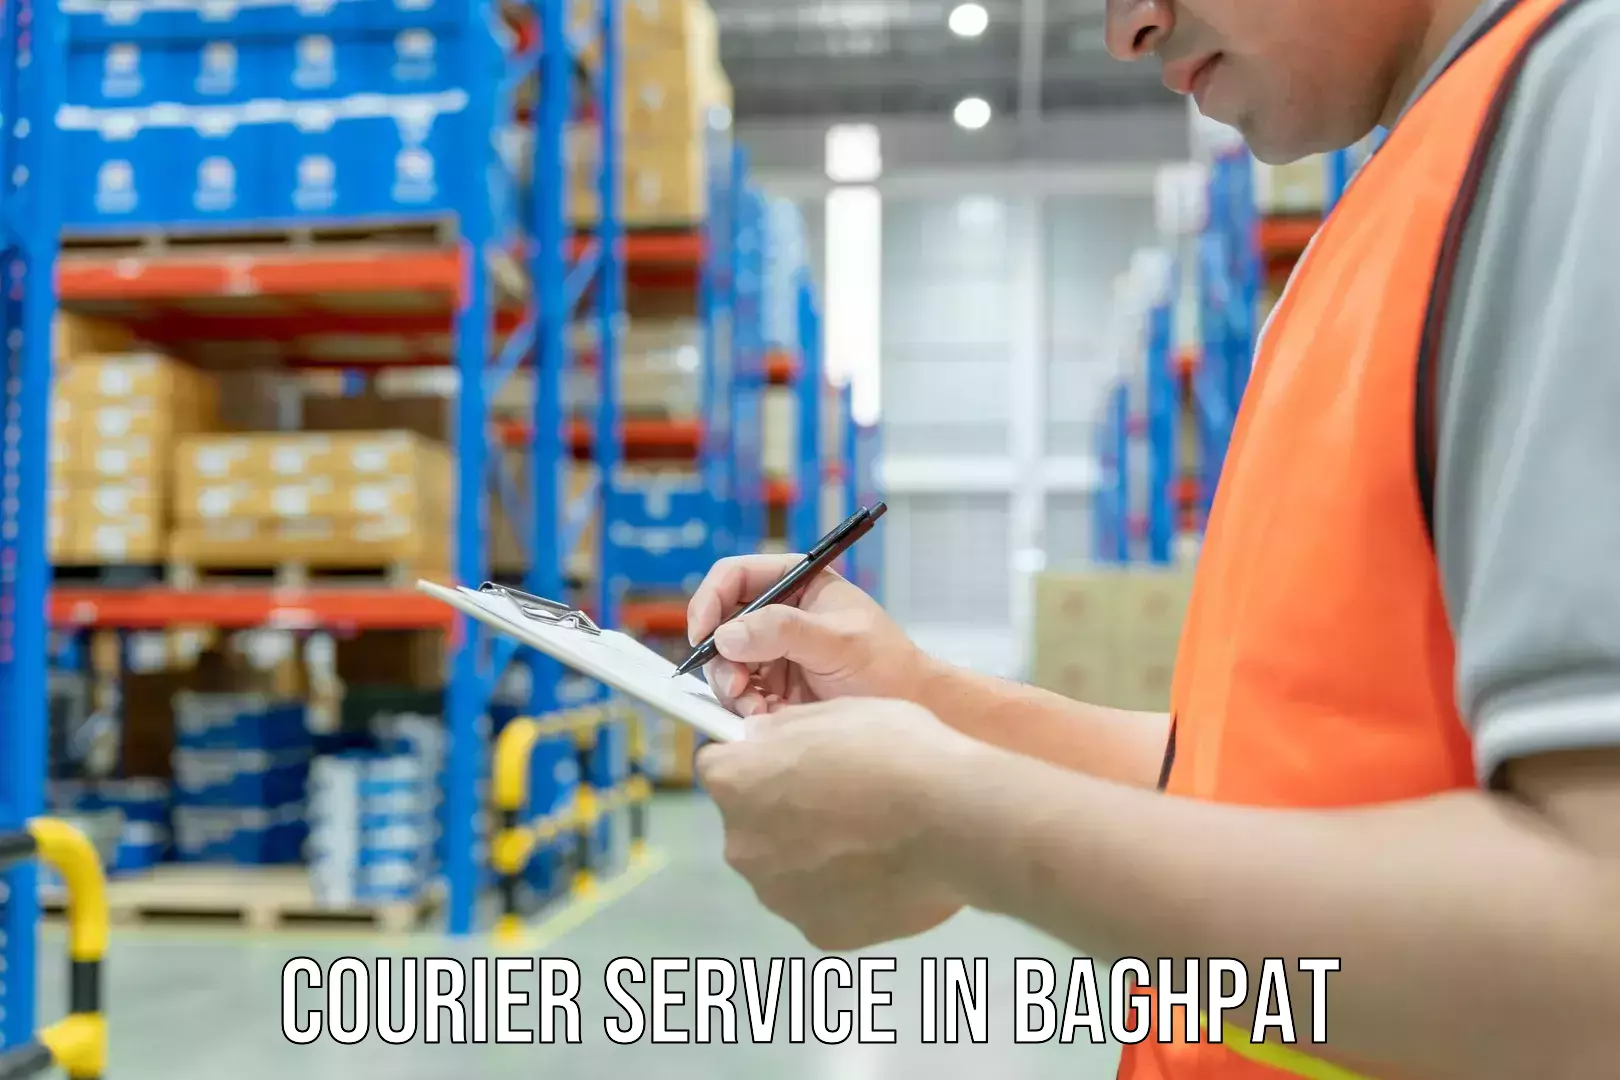 High value parcel delivery in Baghpat